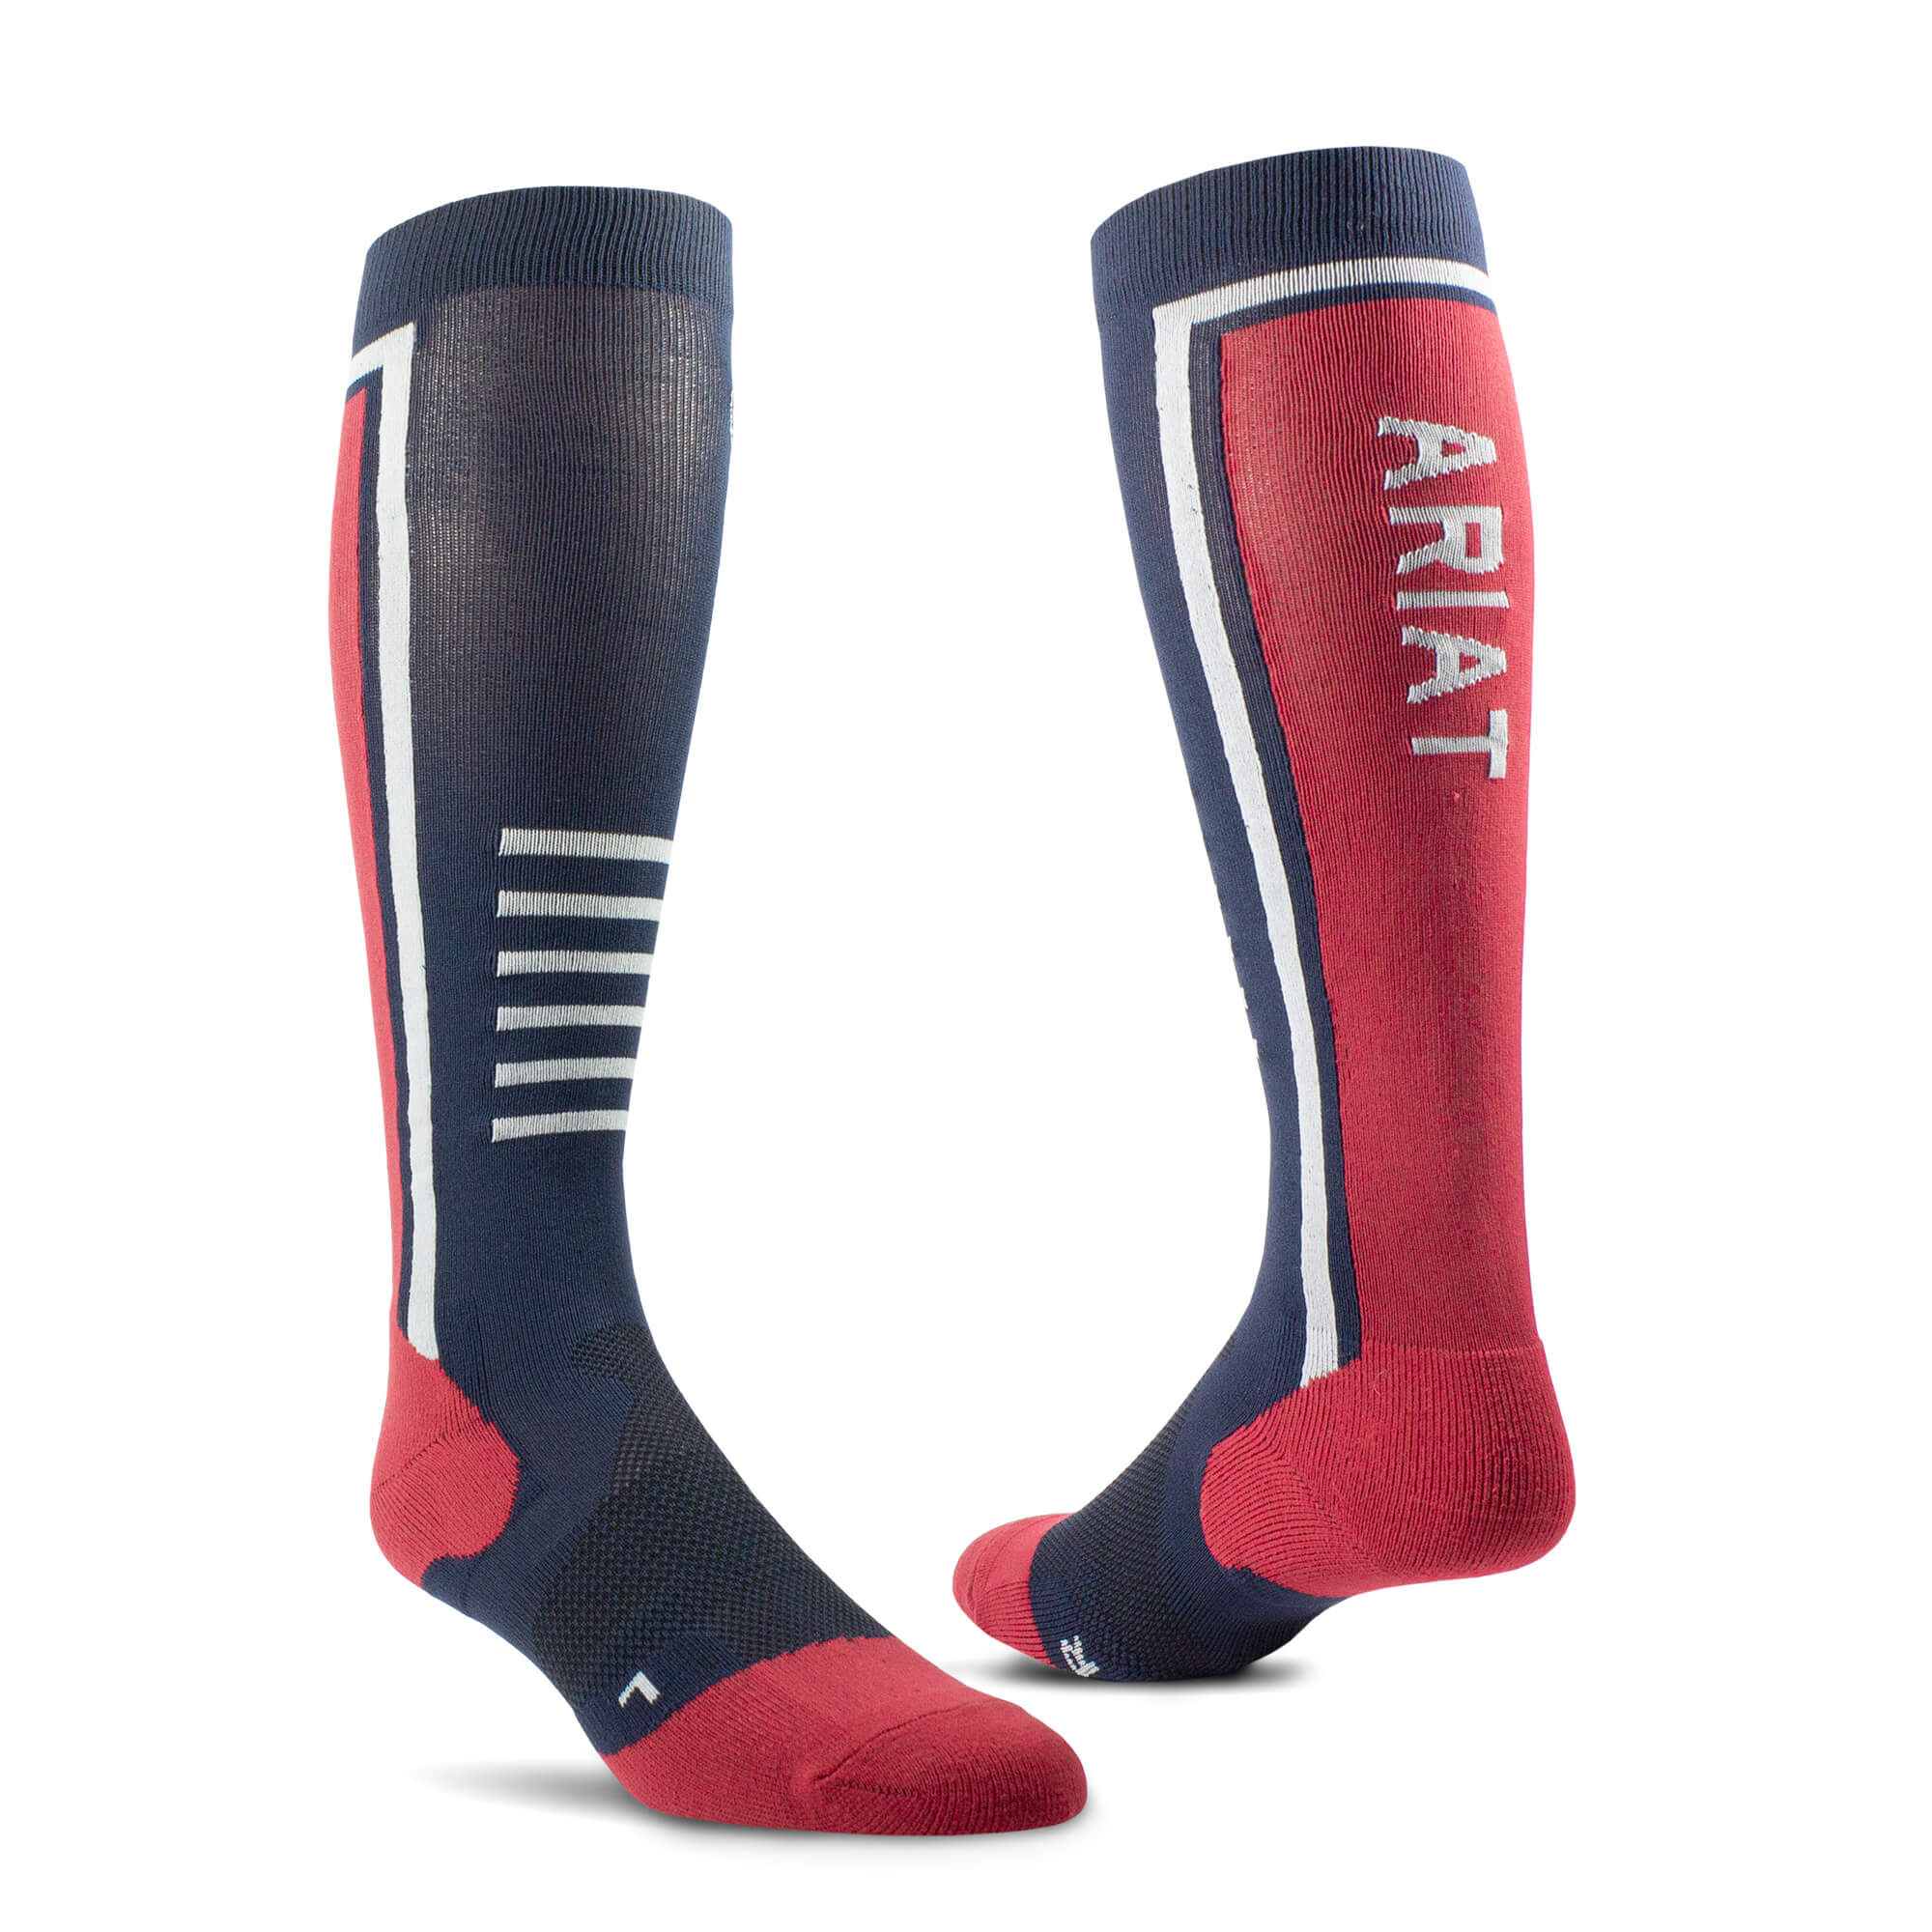 AriatTek Unisex Slimline Performance Socks 